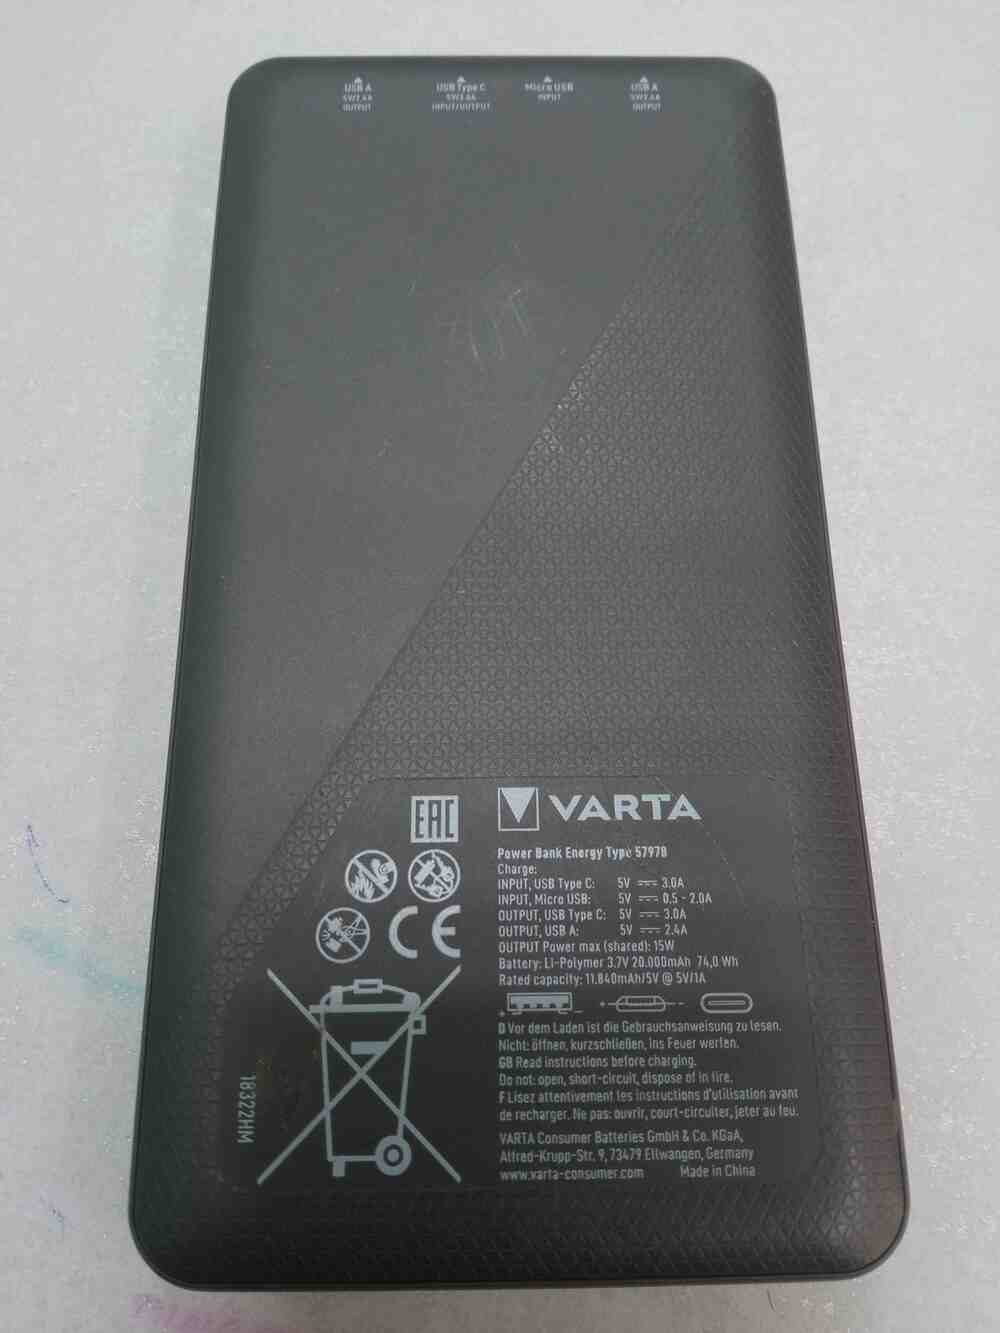 Powerbank Varta 57978 20000 mAh White-Black 5